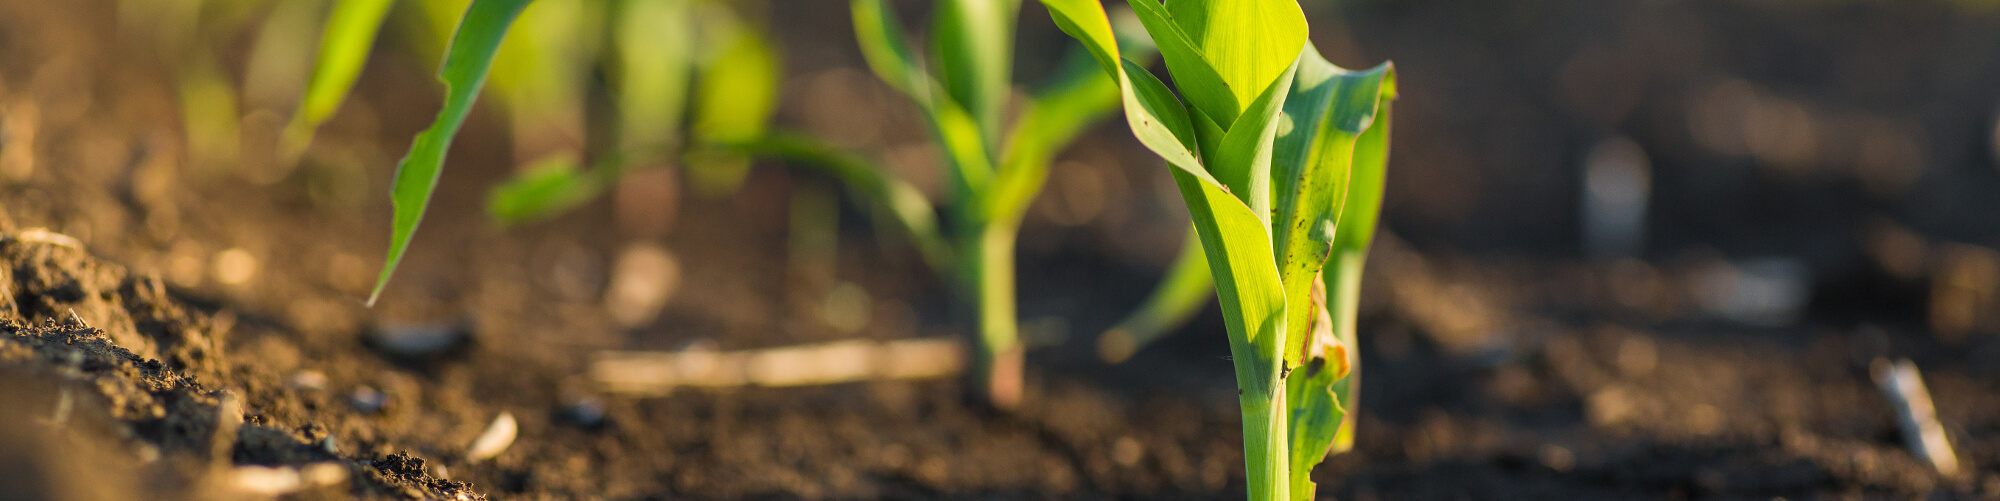 AgrarBlog - Bodenhilfsstoffe